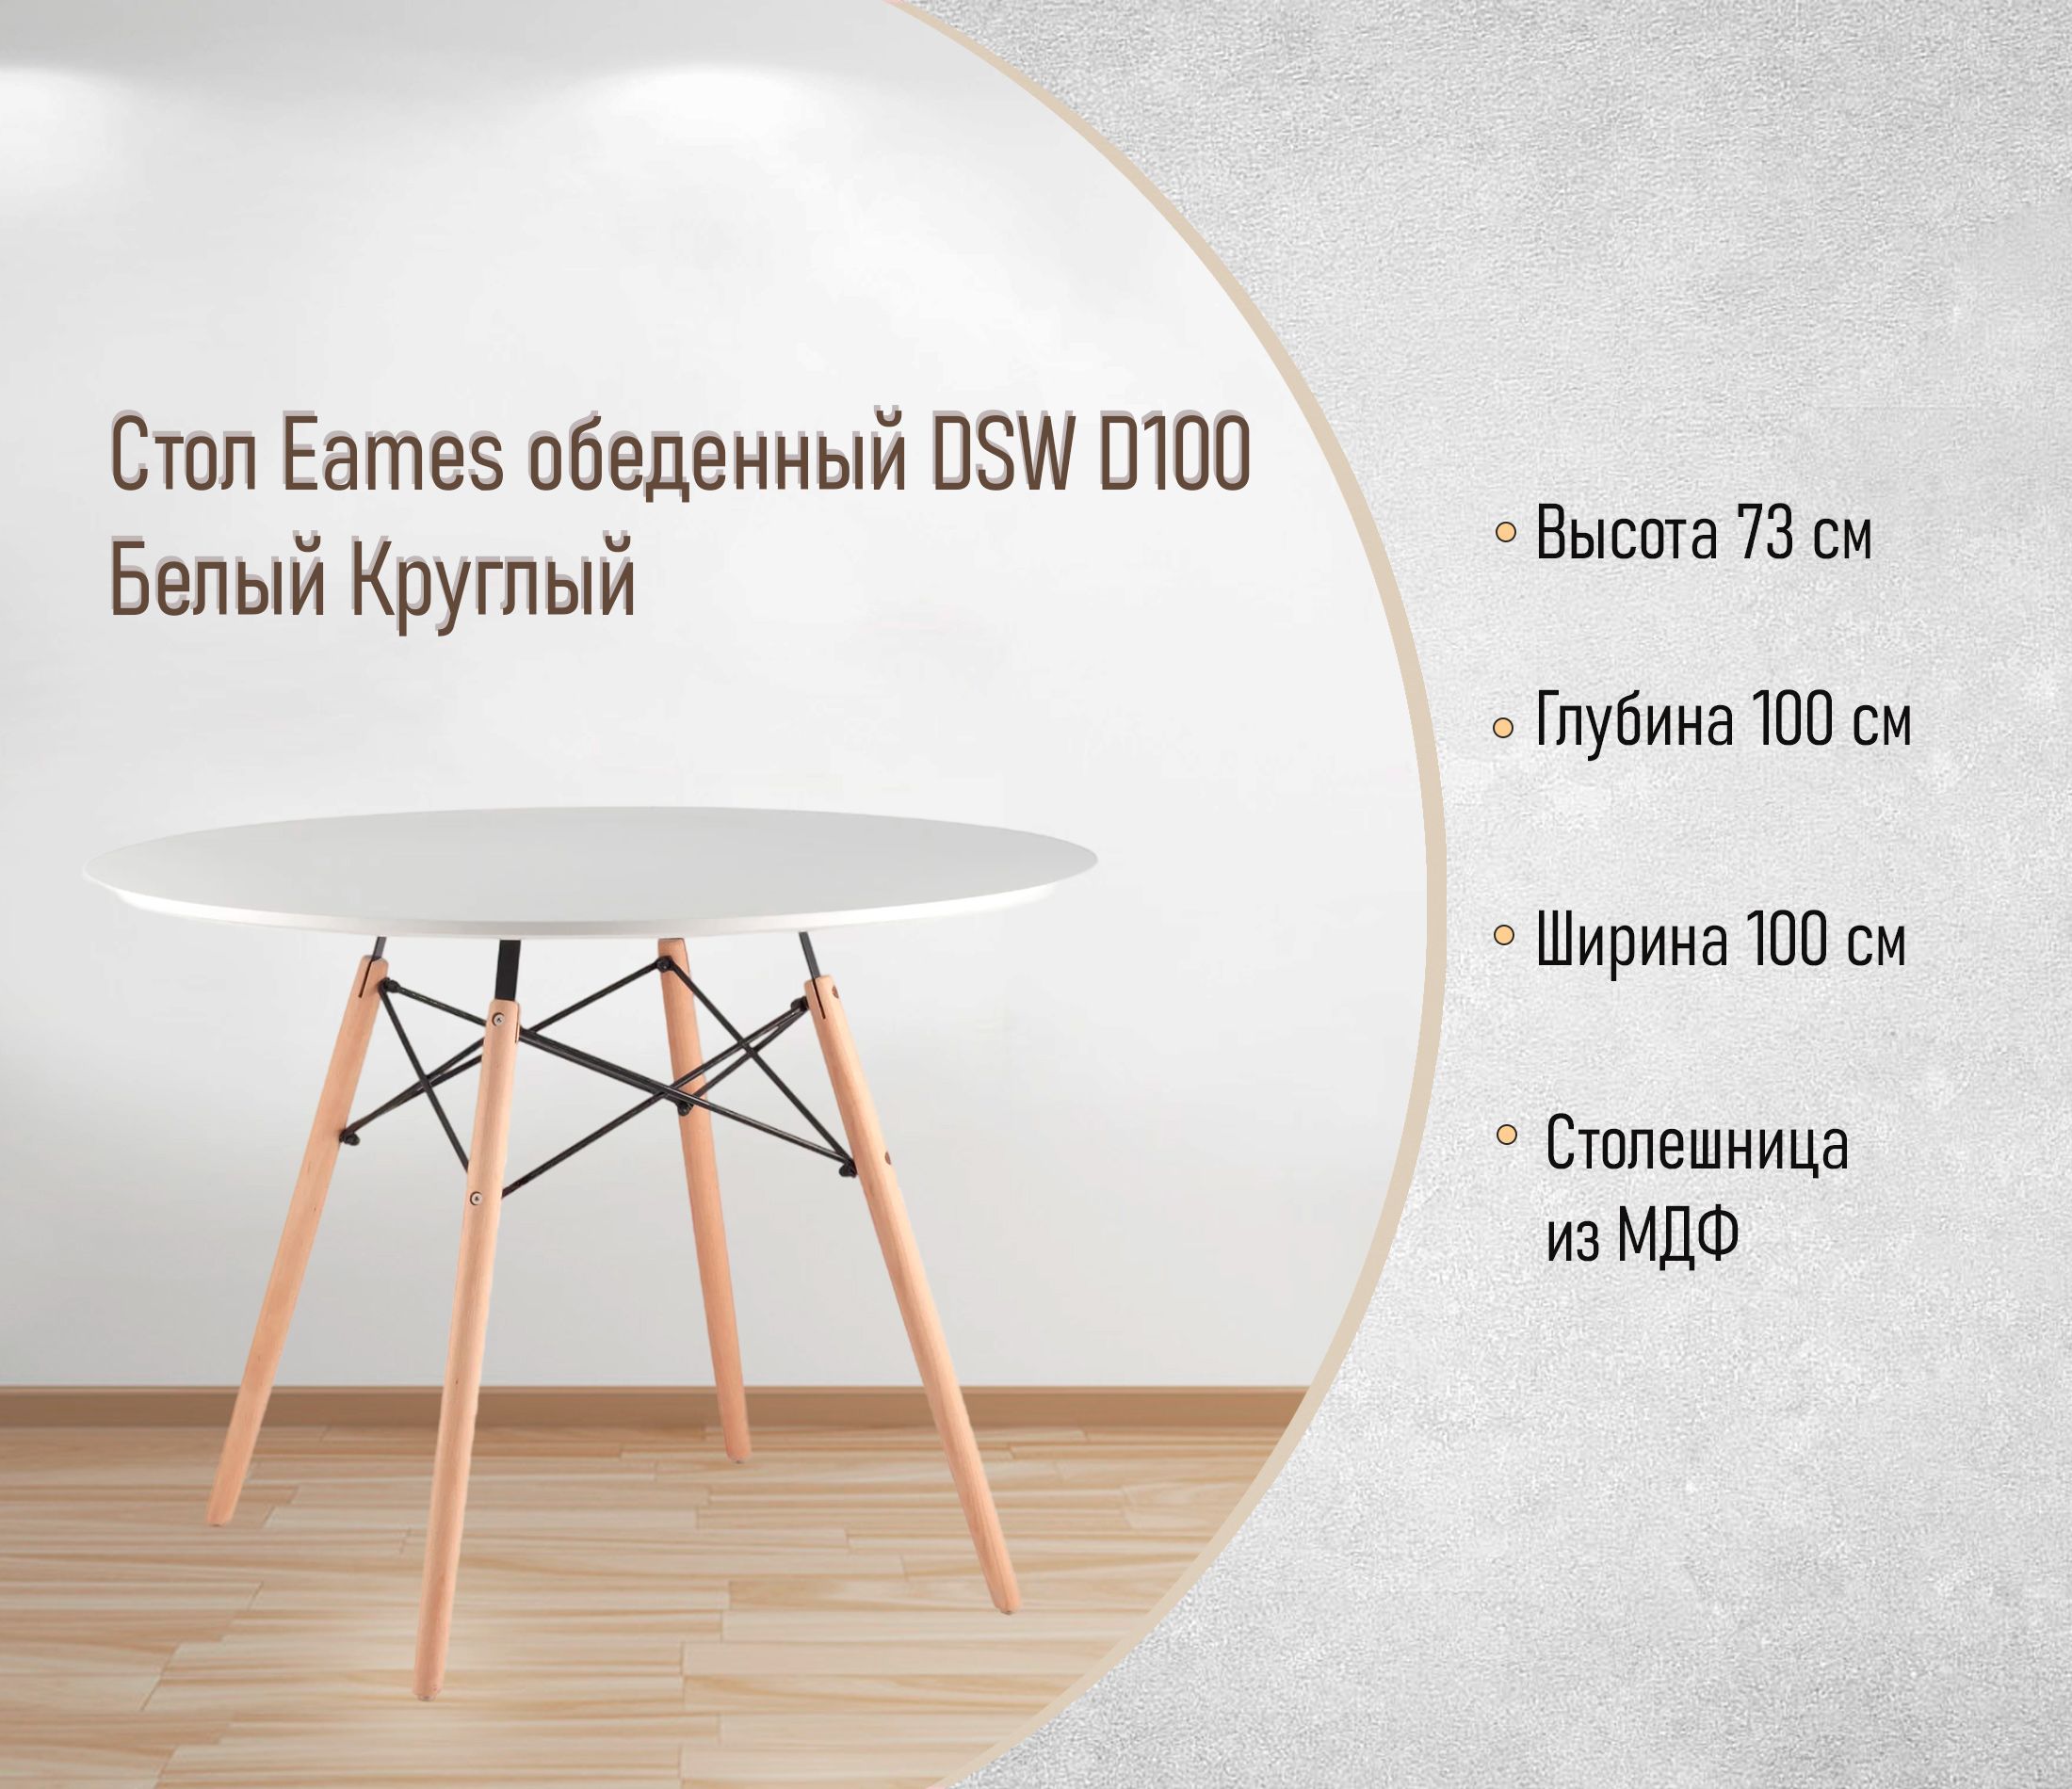 Стол Eames обеденный DSW D100 Белый Круглый